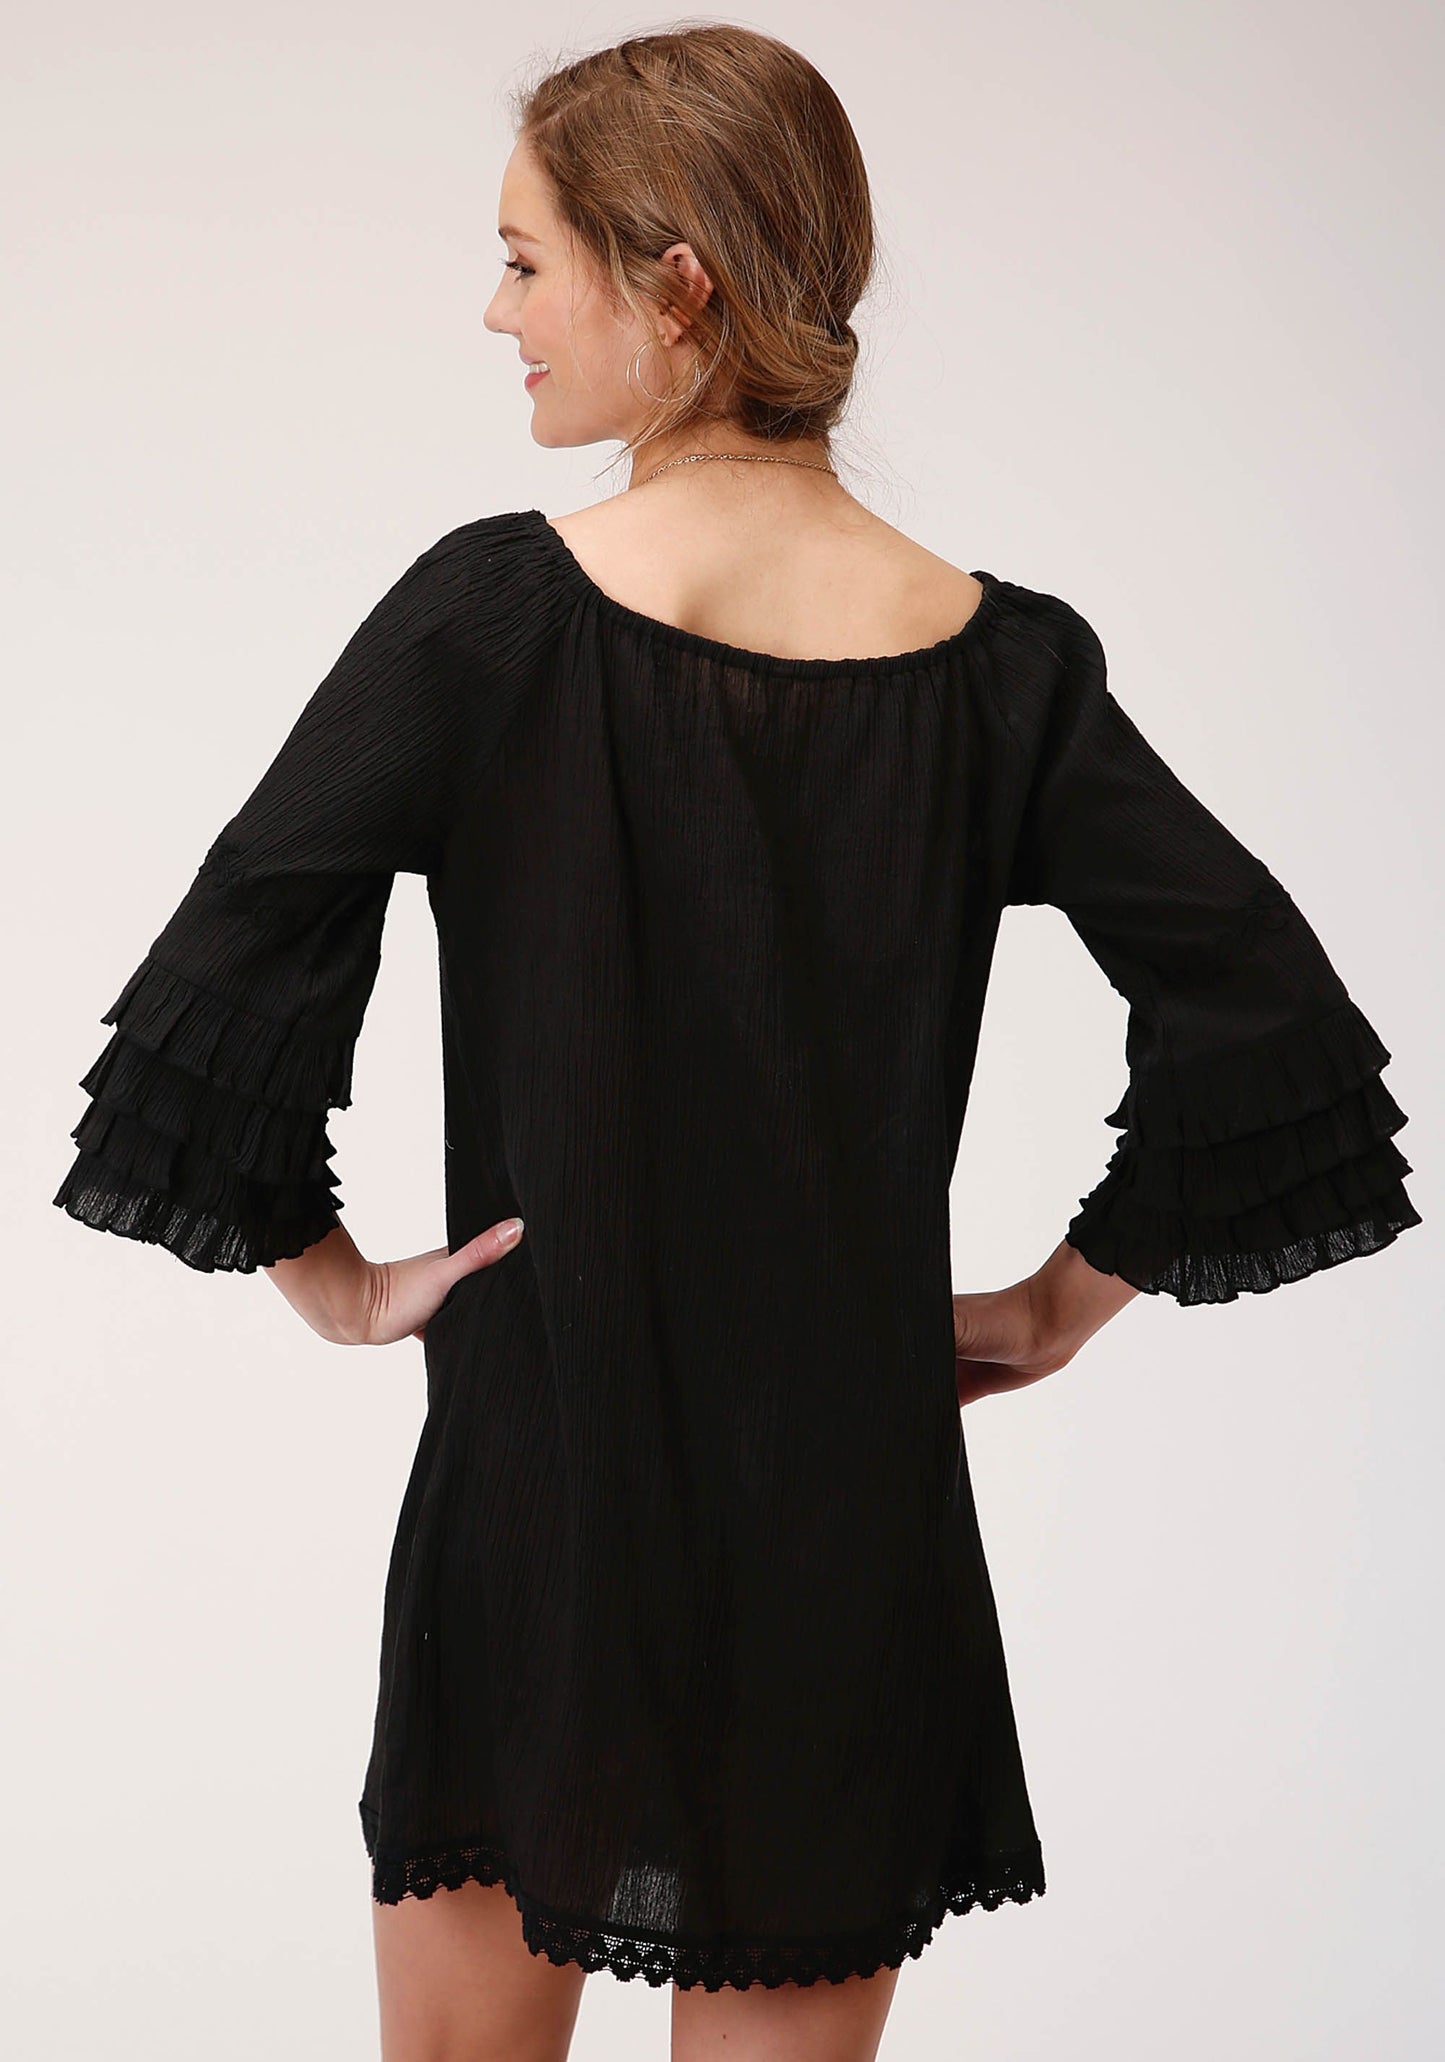 03-057-0565-0123BL Roper Women's Five Star Dress Black